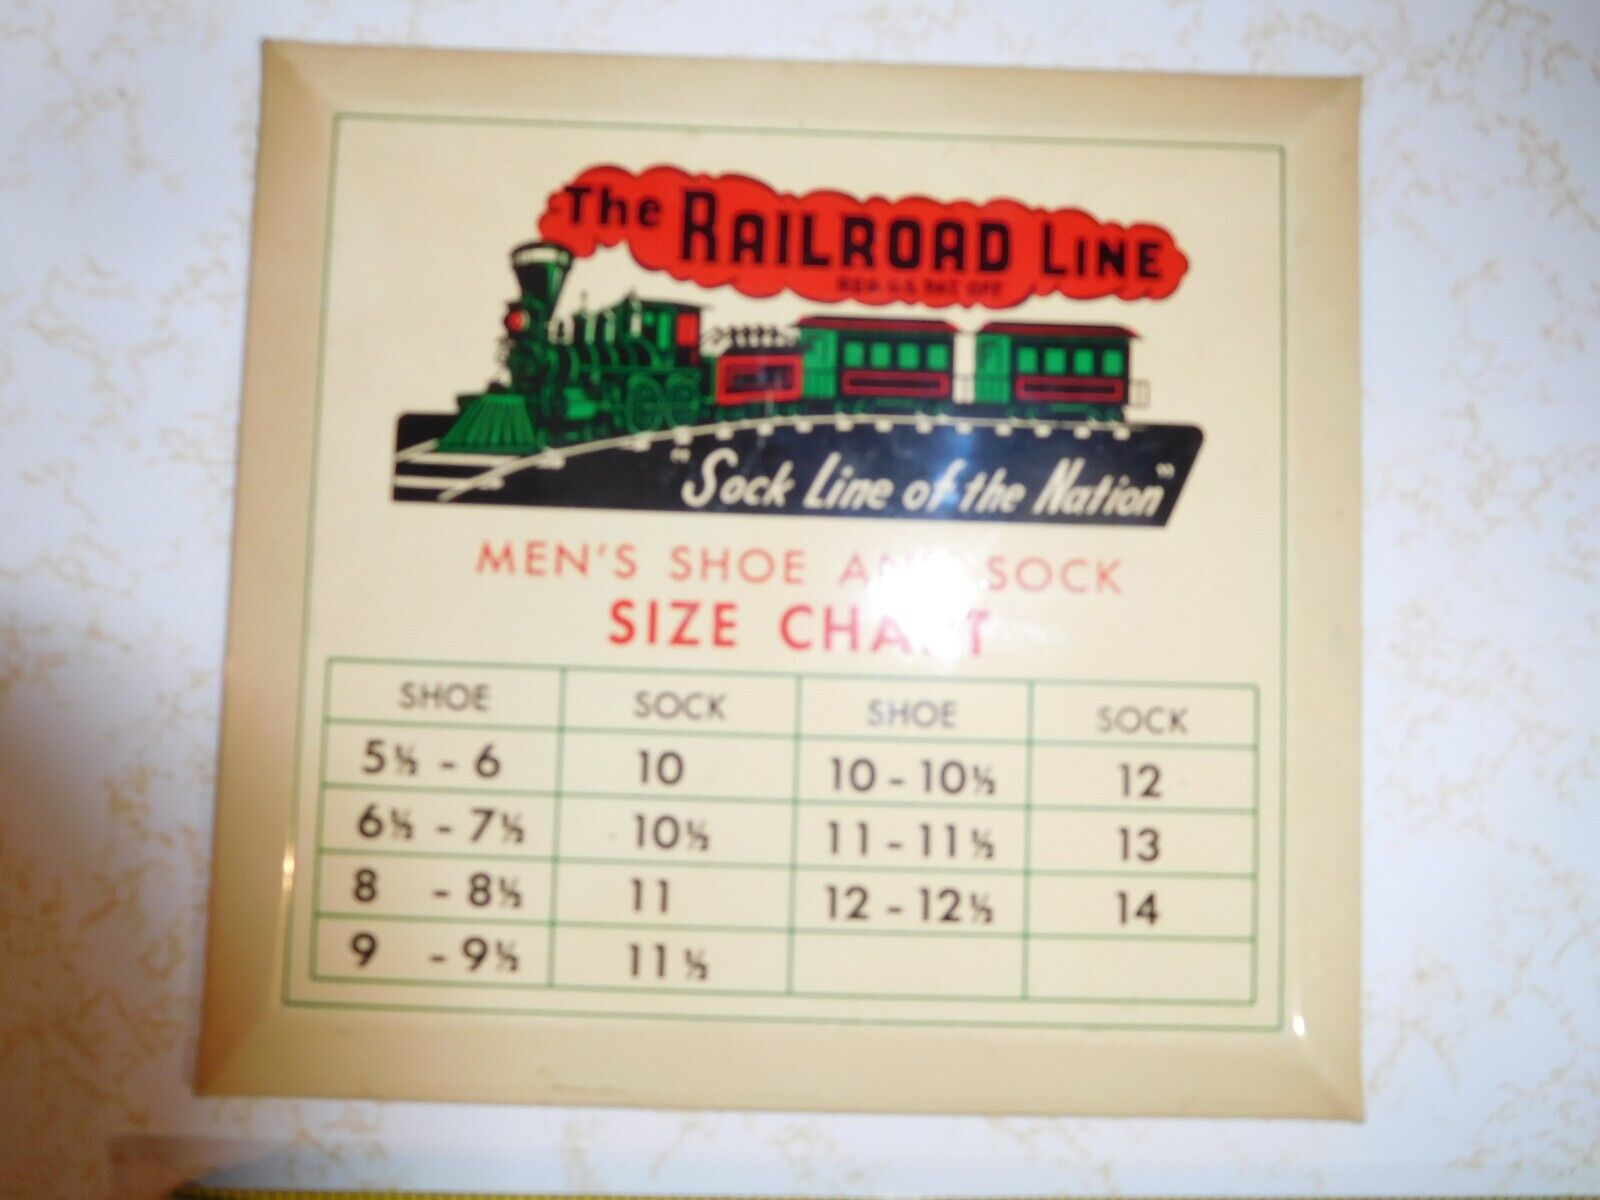 Rare Vintage Tin Litho Sign Railroad Line Sock Line of the Nation Men's Shoe